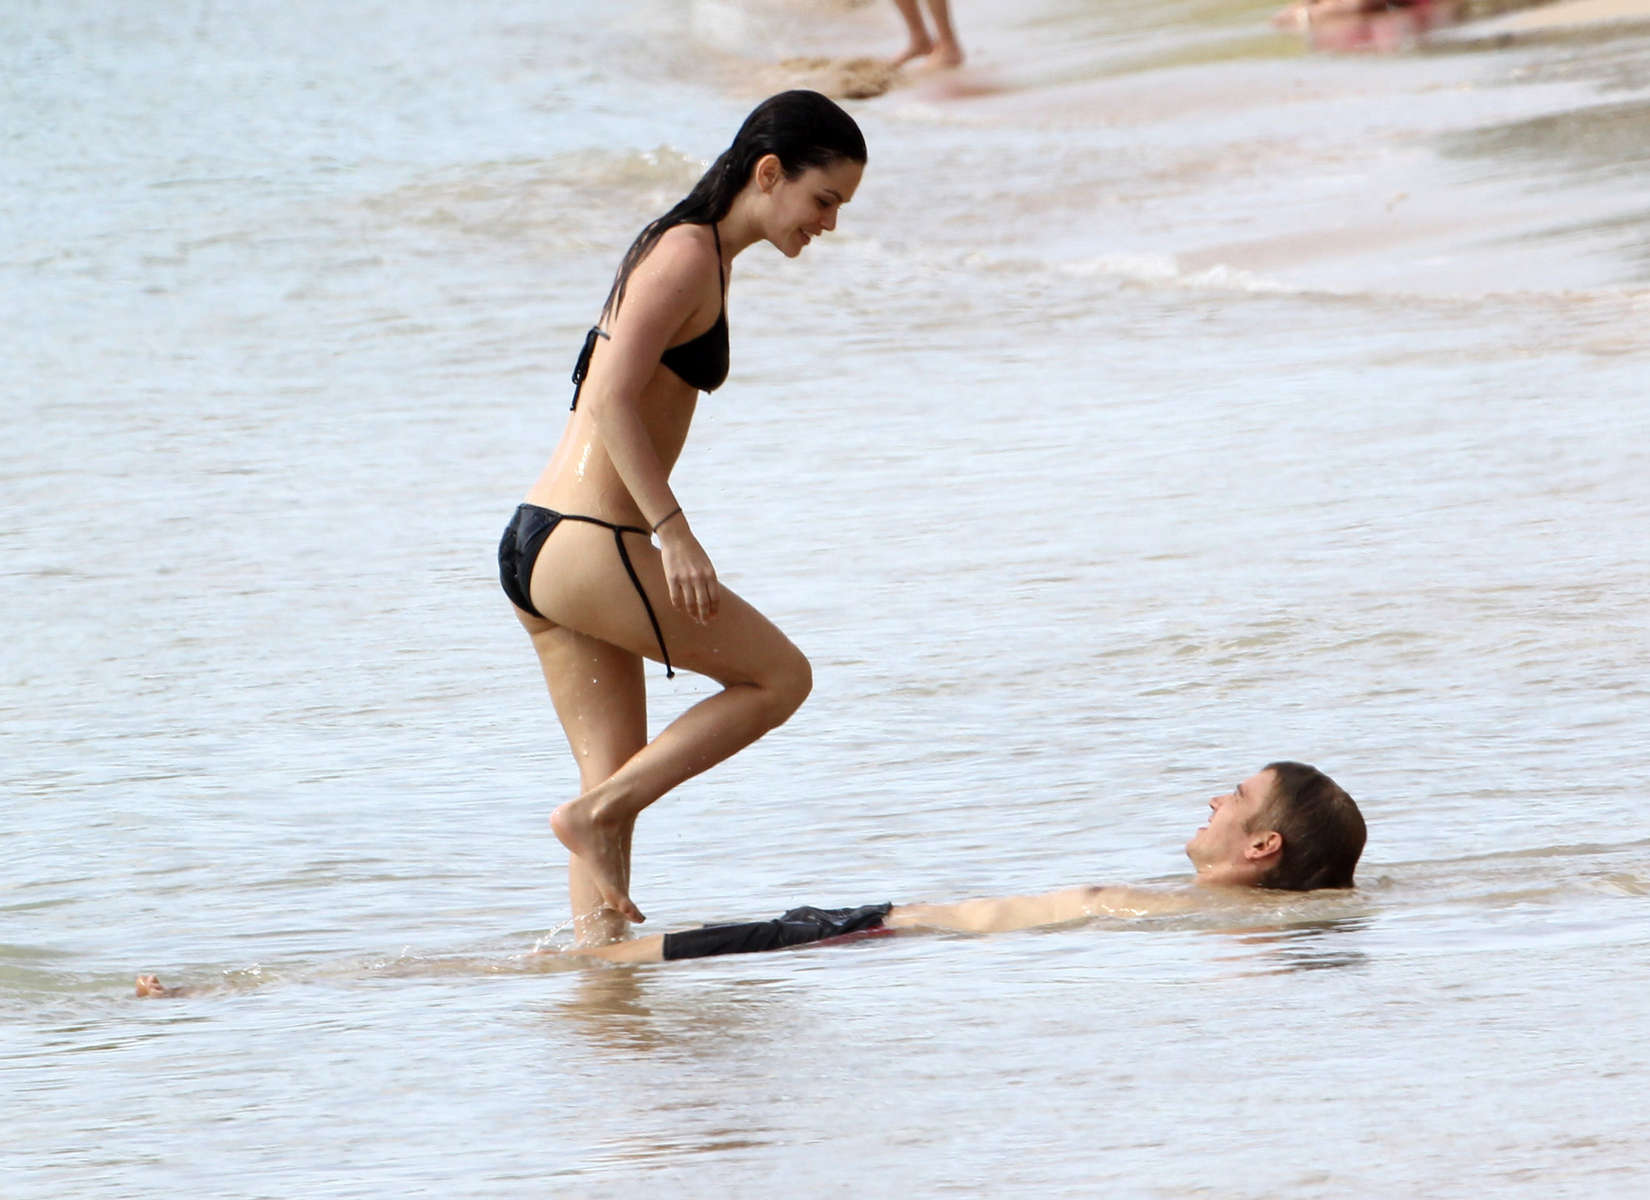 Rachel Bilson 2012 : Rachel Bilson - New bikini candids at beach in Barbado...